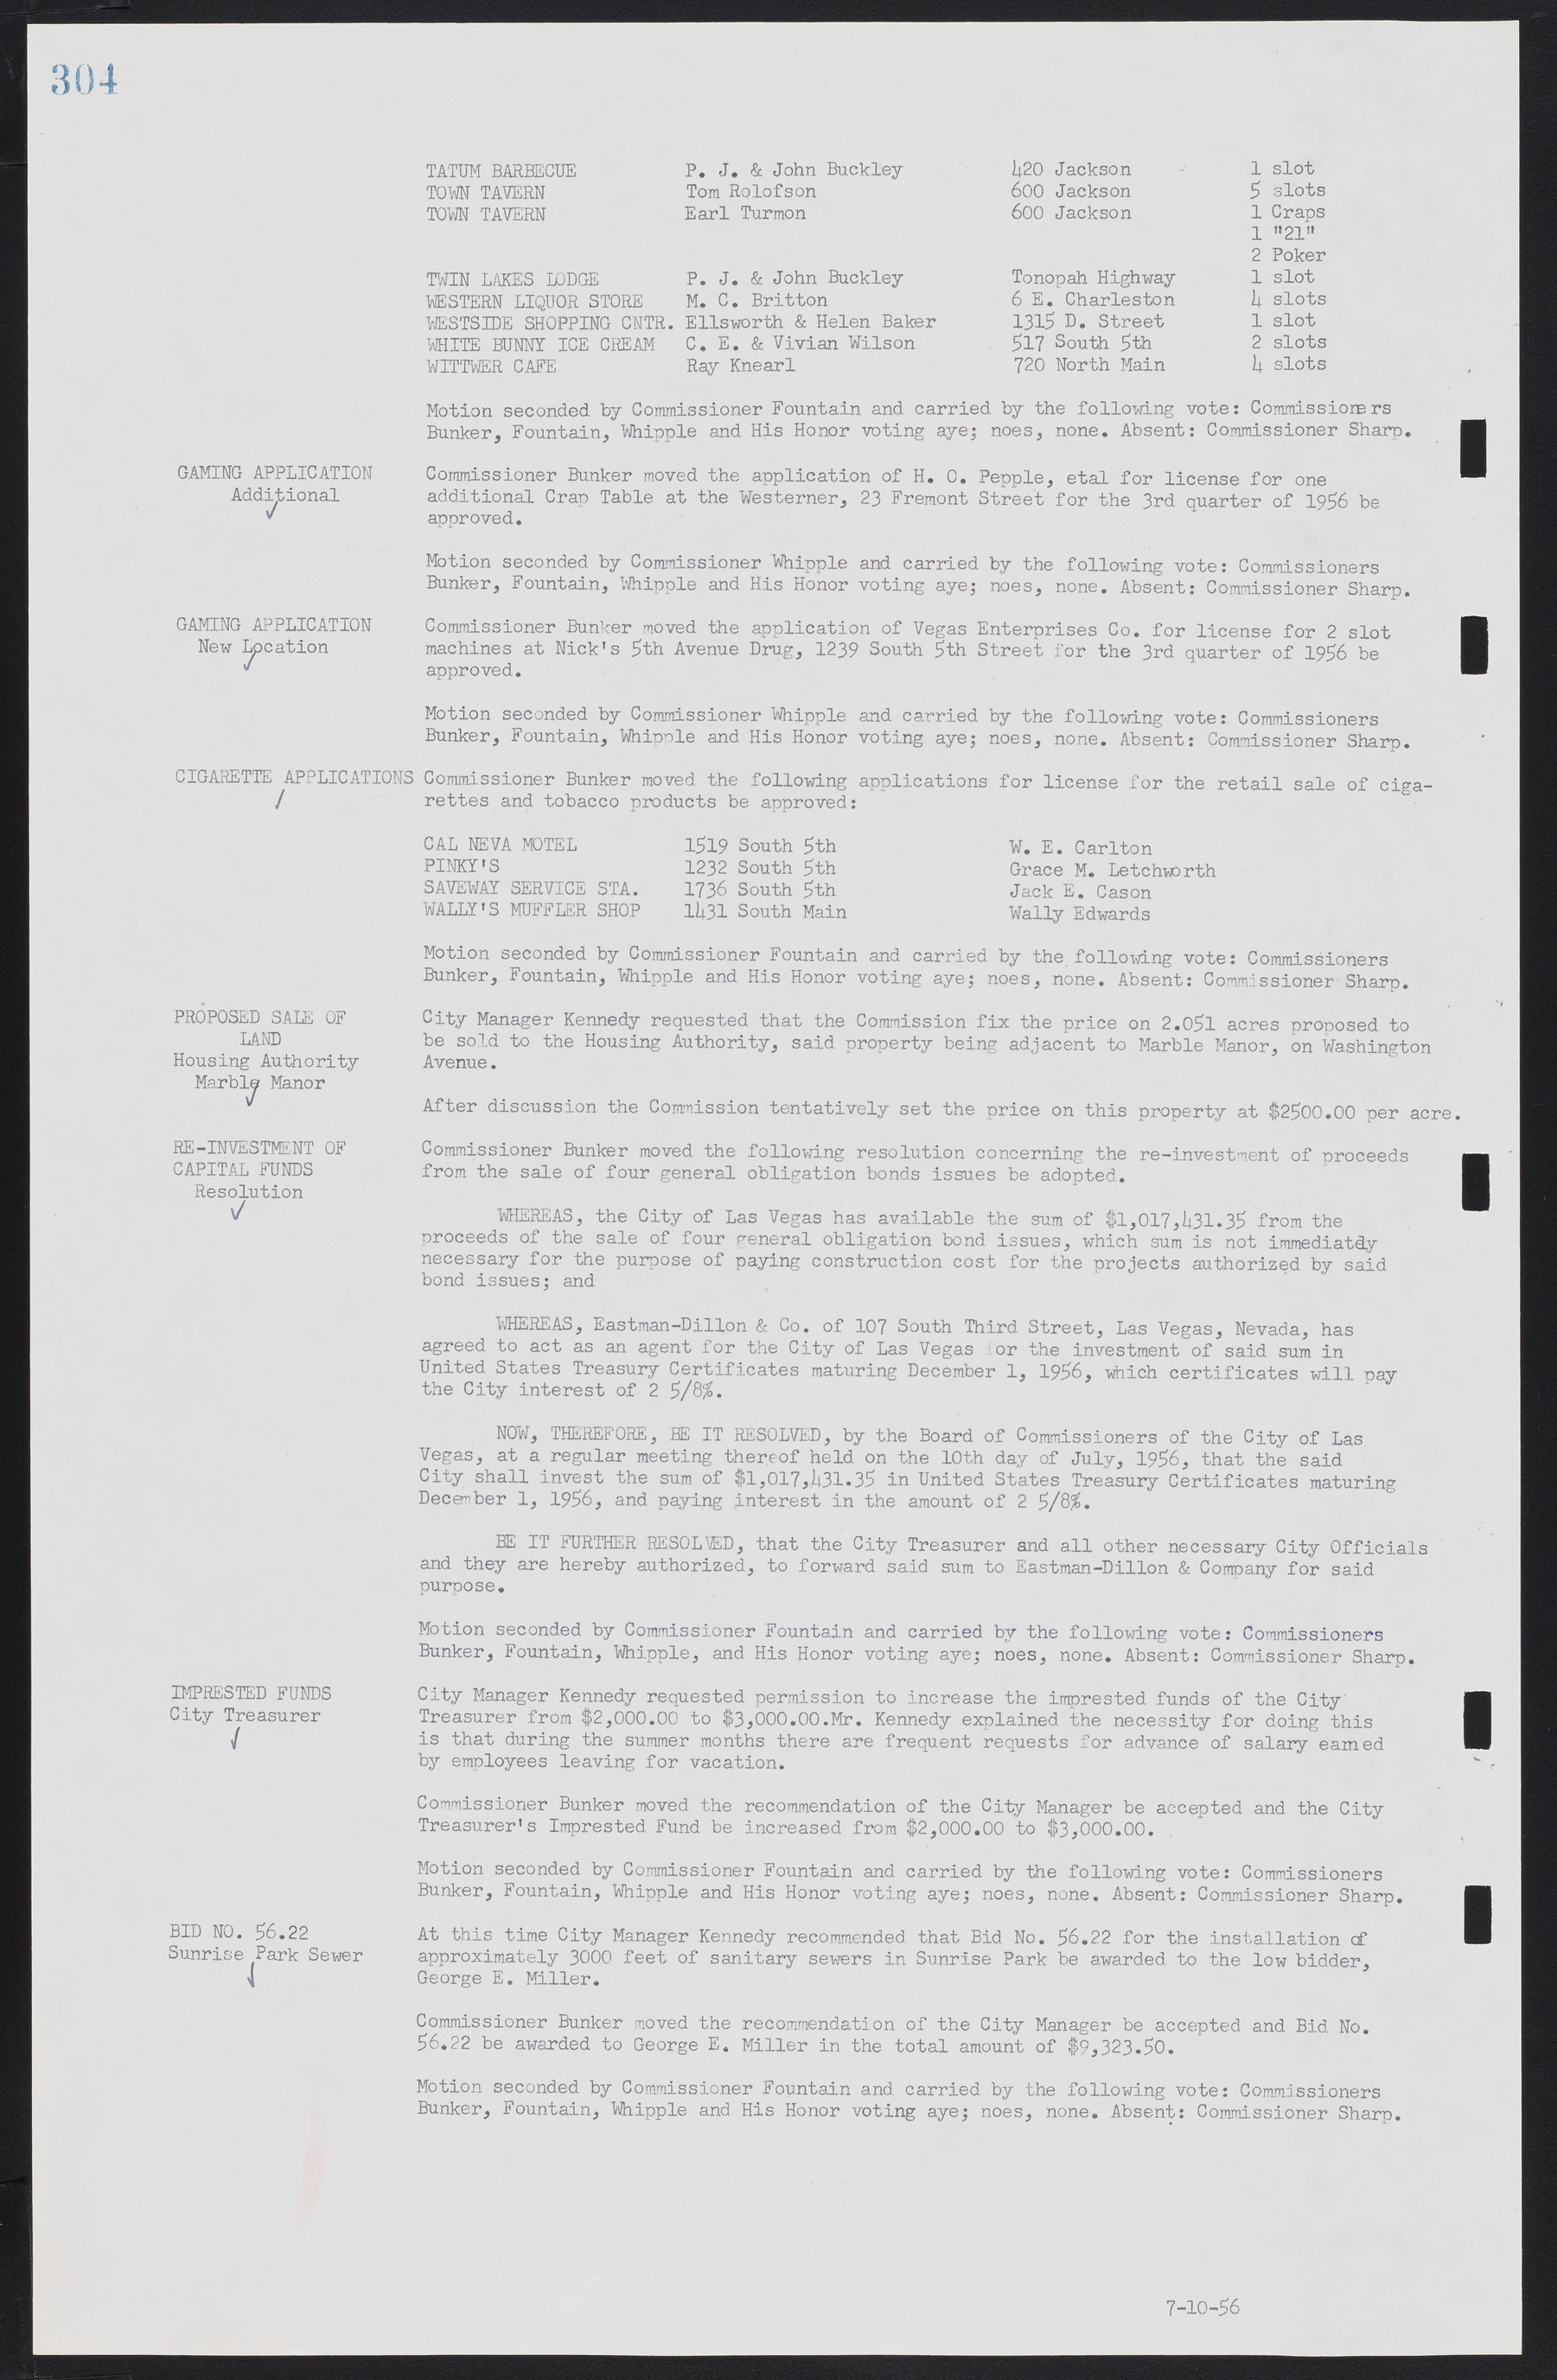 Las Vegas City Commission Minutes, September 21, 1955 to November 20, 1957, lvc000010-324